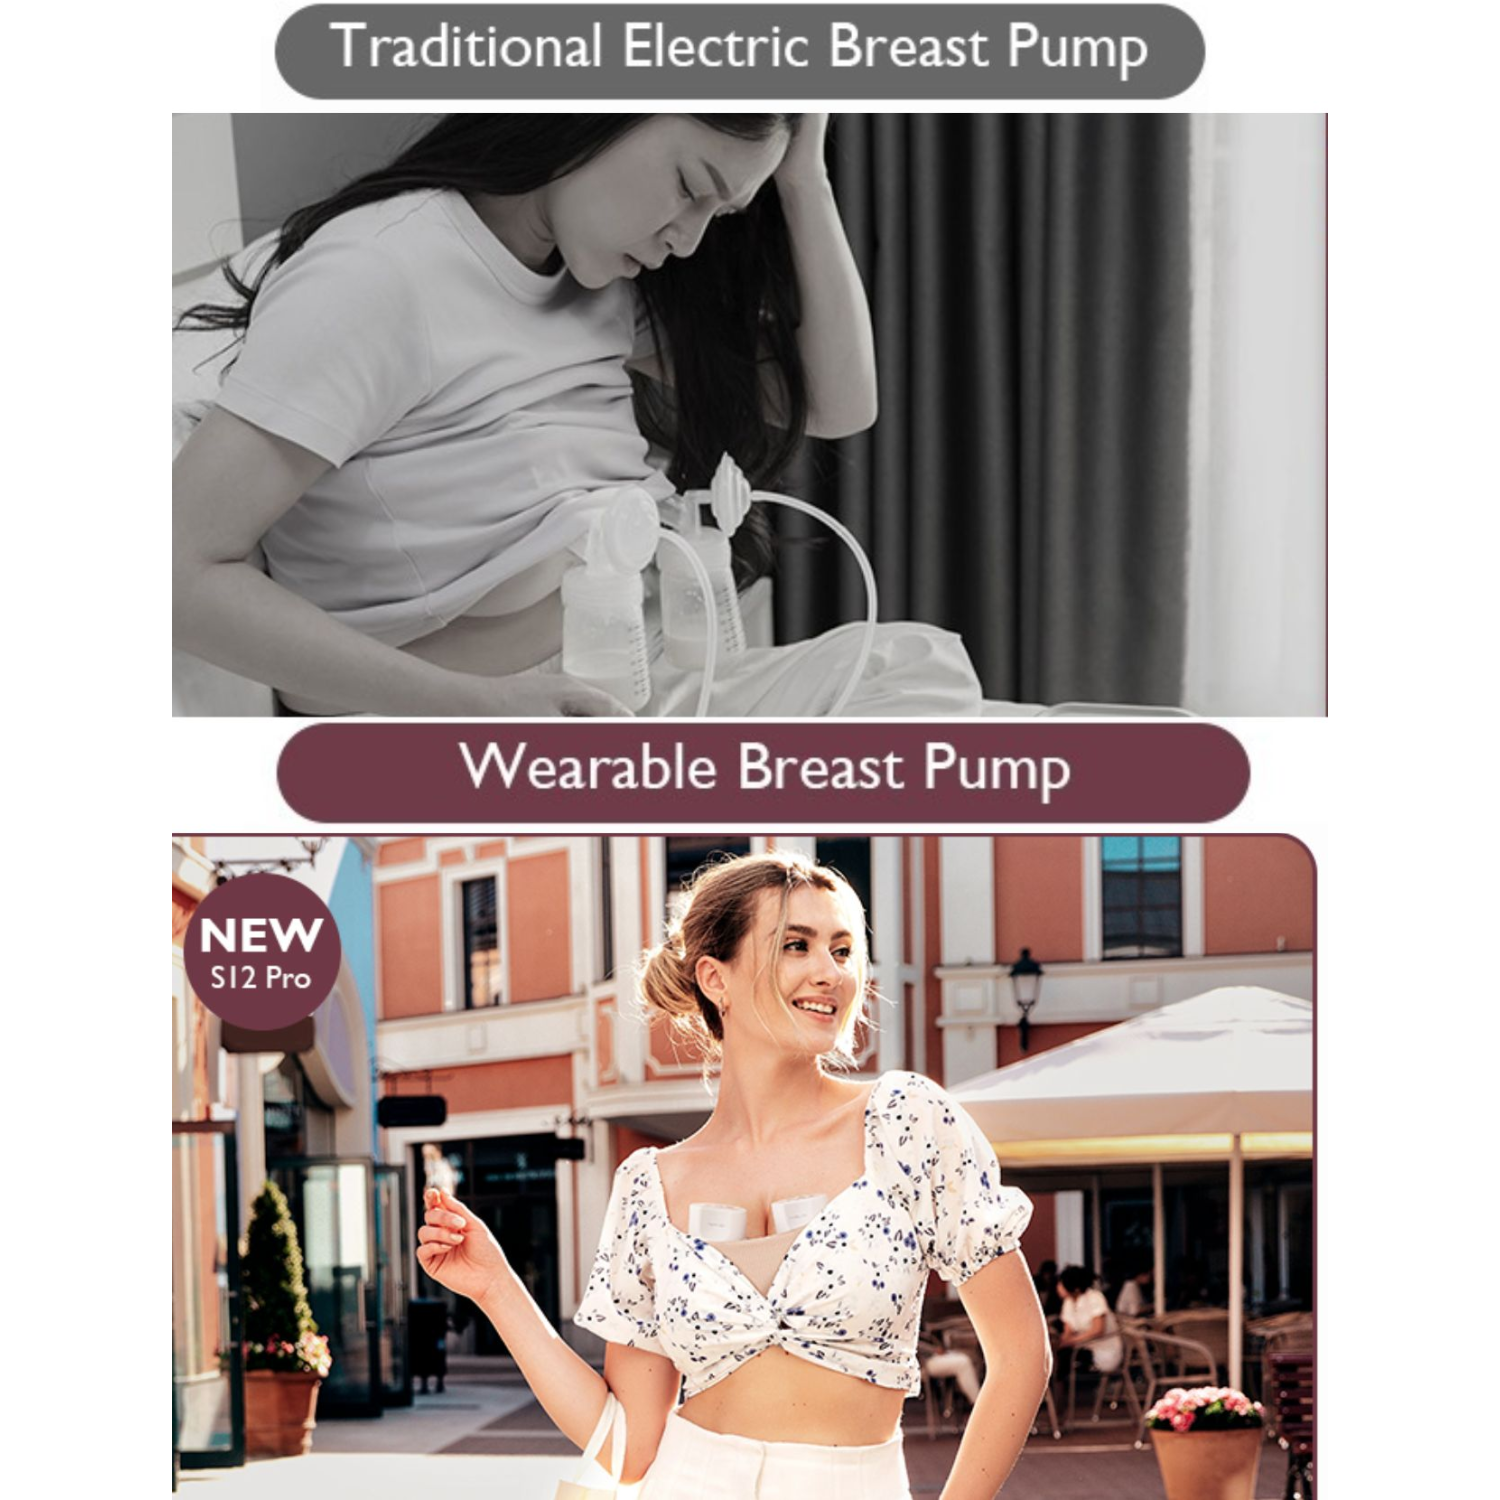 S12 Pro Wearable Breast Pump: Efficient & Quiet